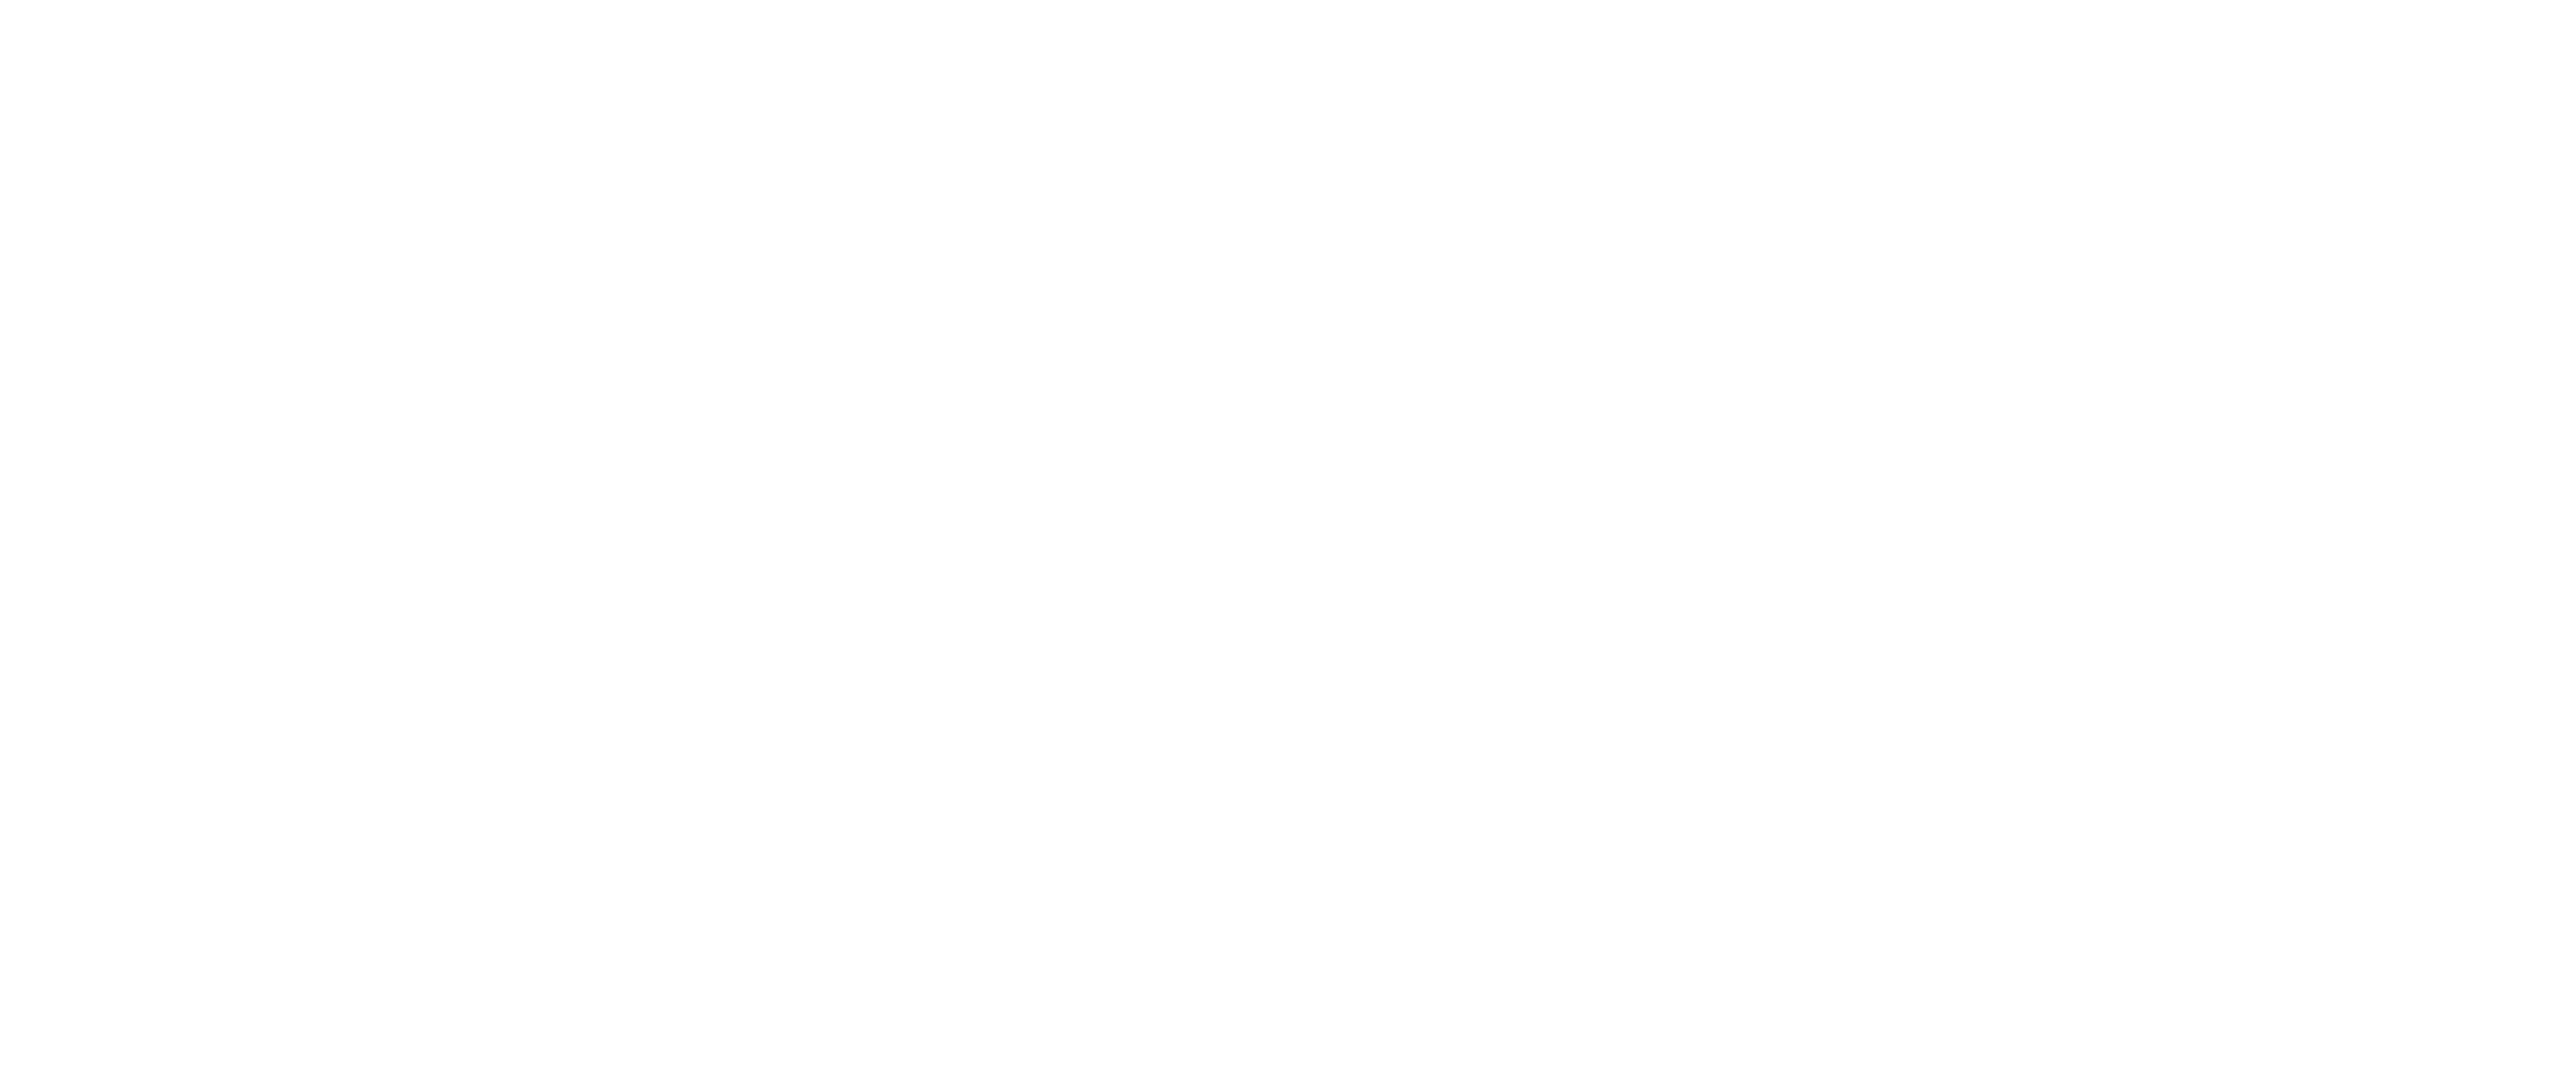 Wheeling Heritage